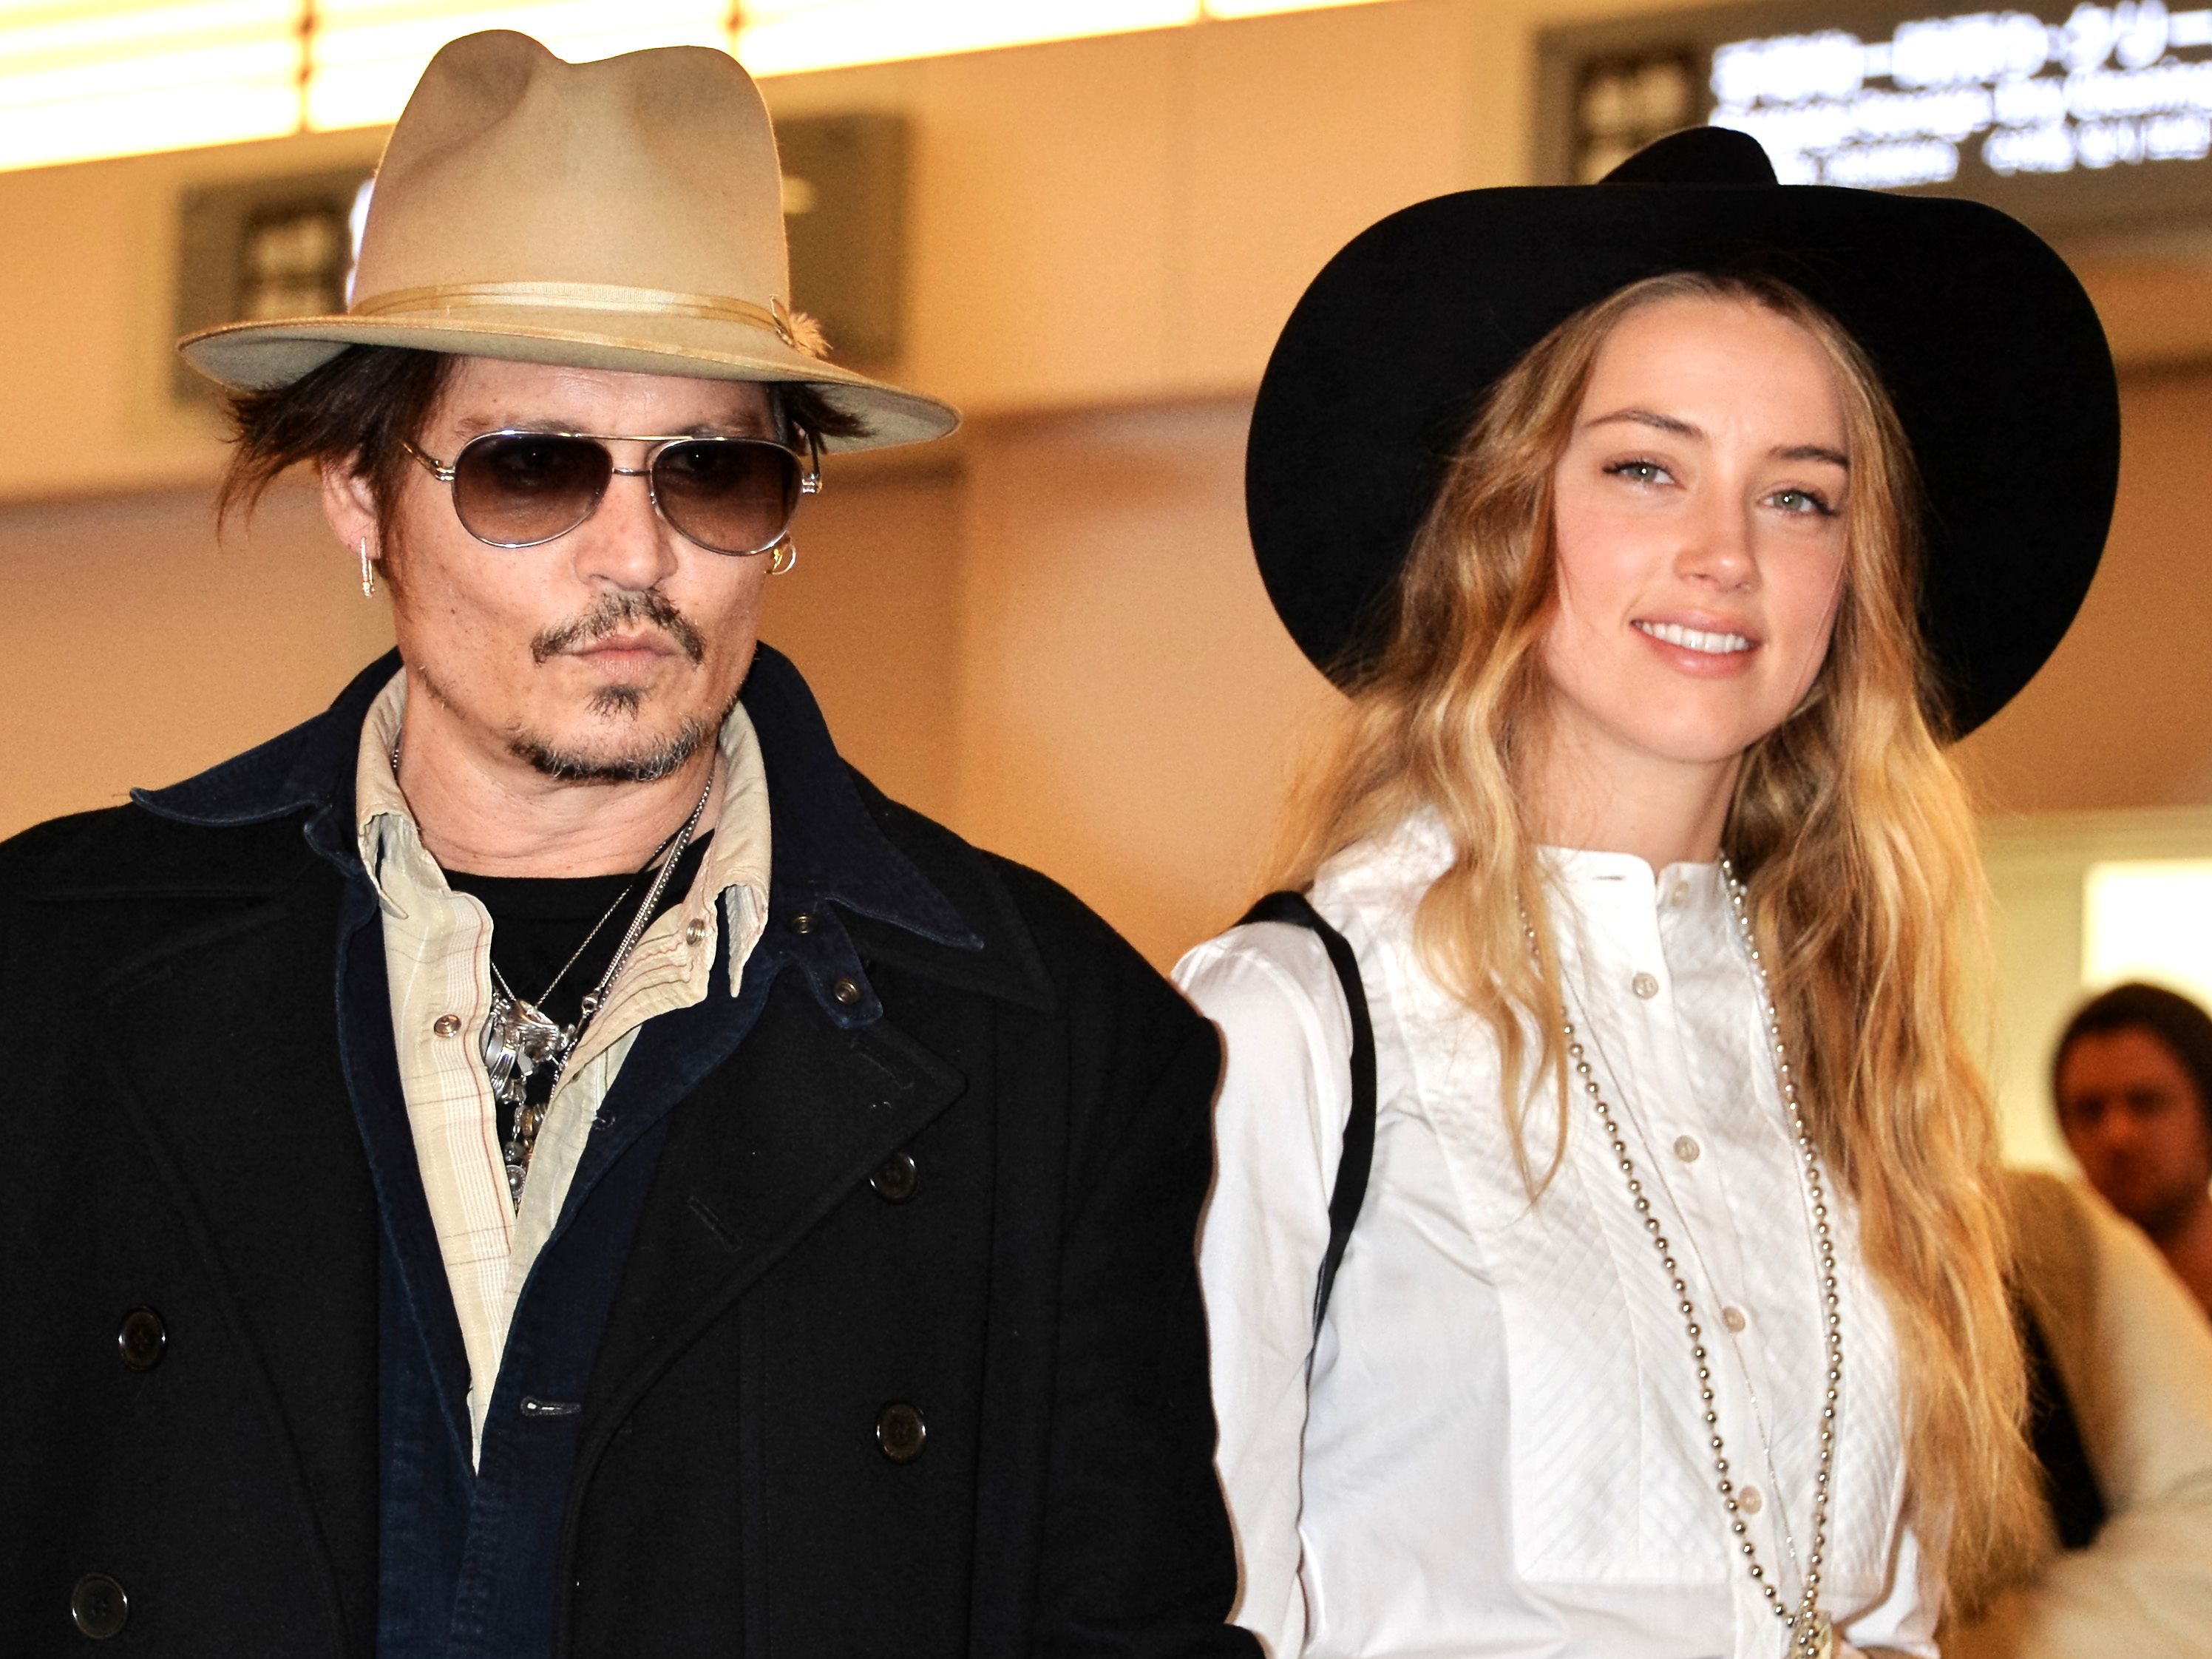 Mandatory Credit: Photo by Aflo/REX (4383395g) Johnny Depp and Amber Heard Johnny Depp and Amber Heard at Haneda International airport, Tokyo, Japan - 26 Jan 2015